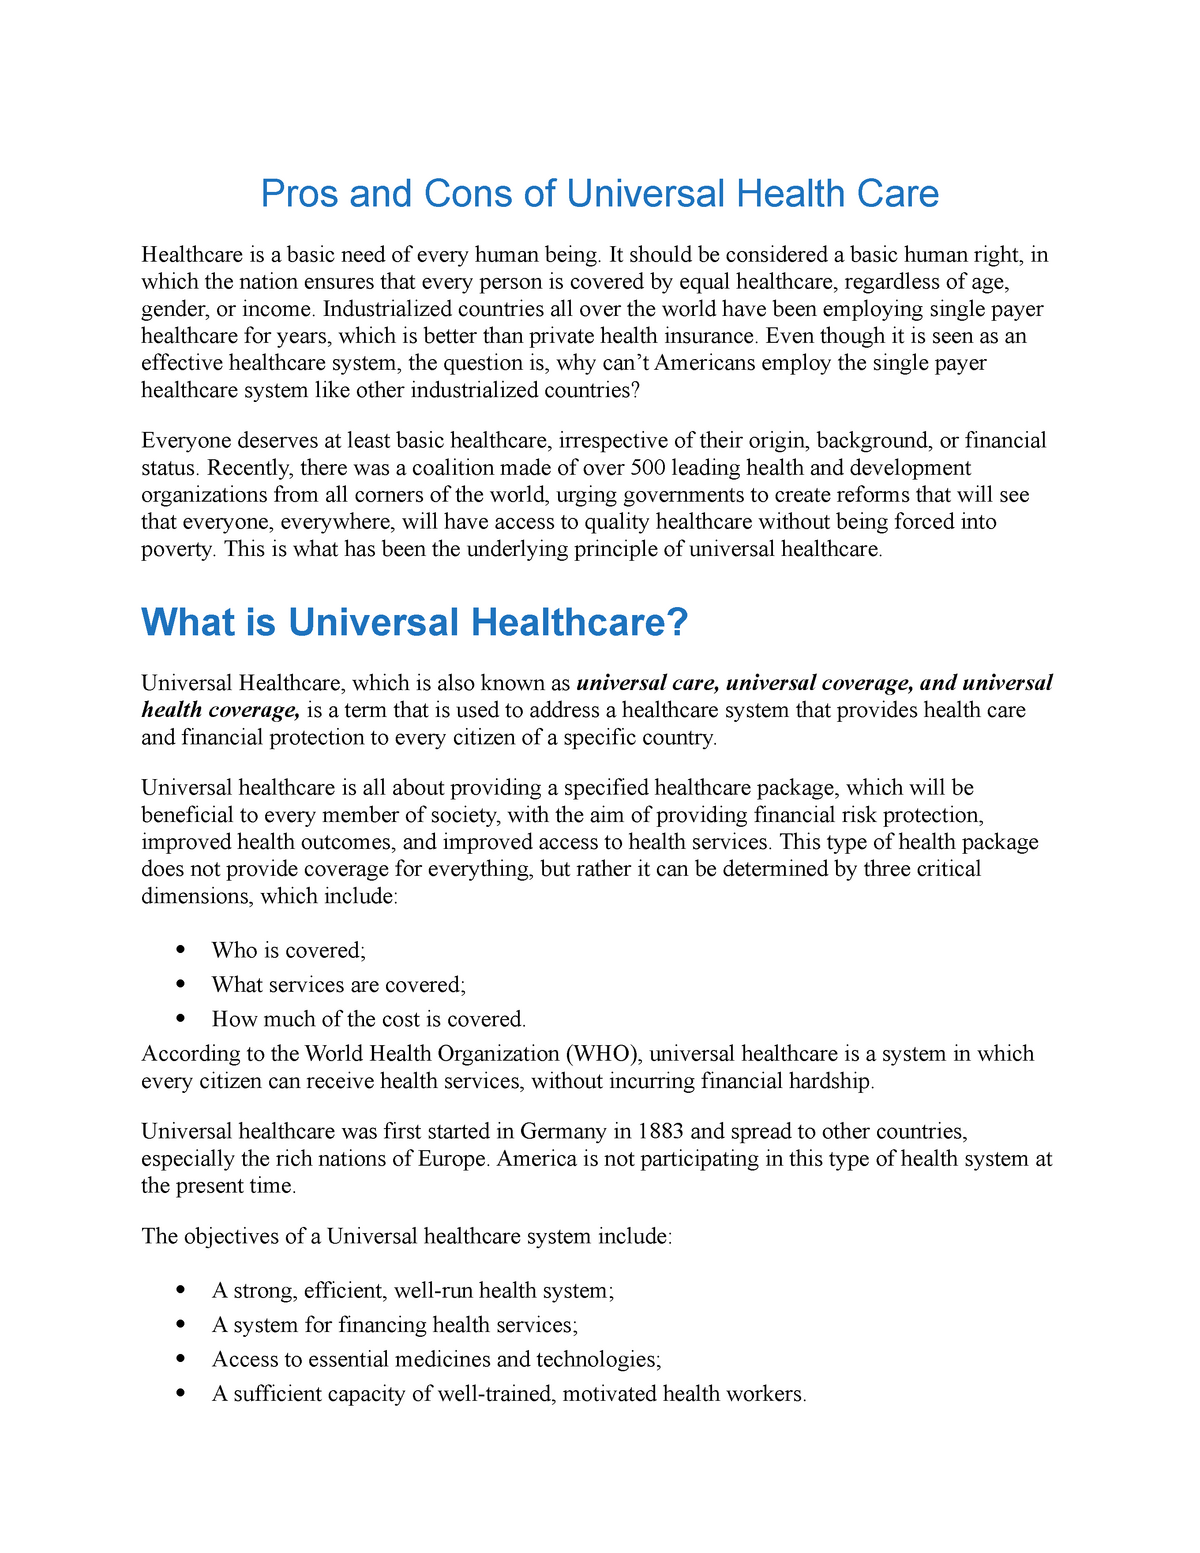 essays against universal healthcare